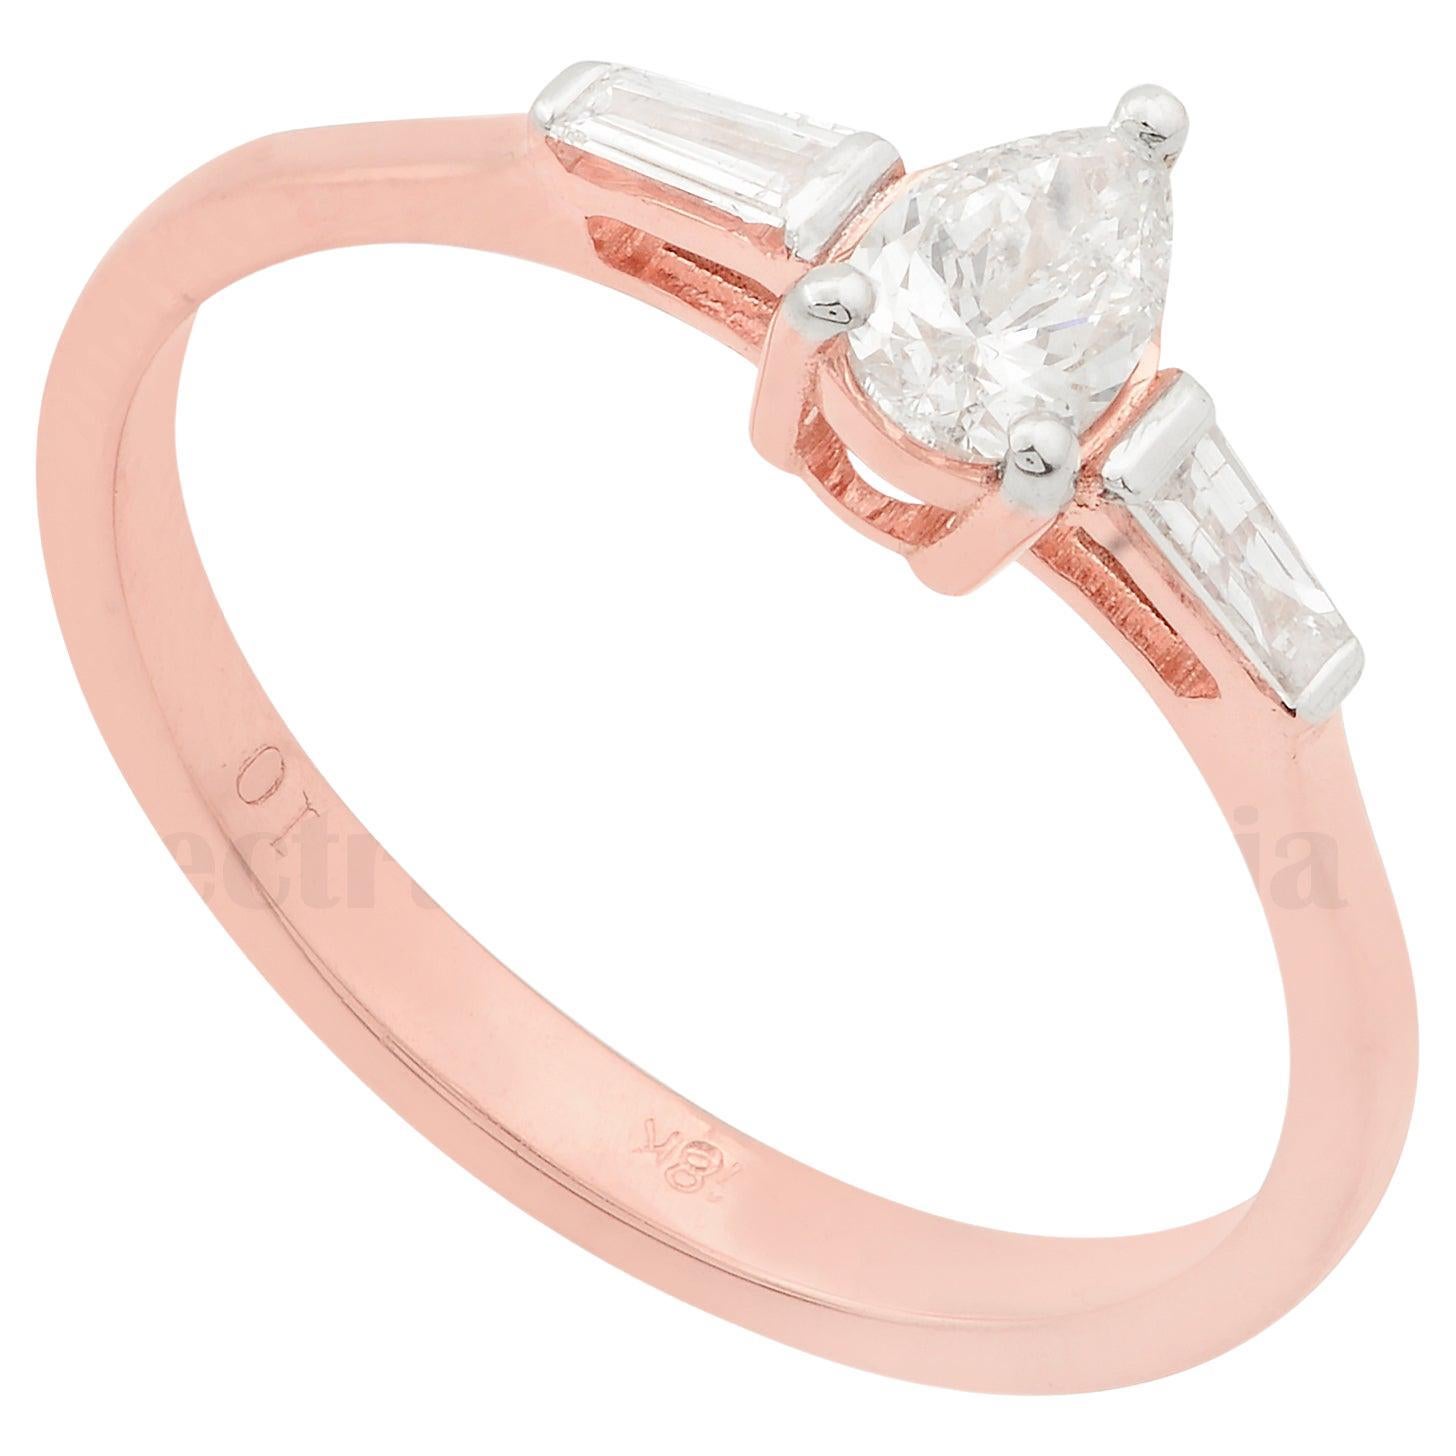 0,48 Karat birnenförmiger Baguette-Diamant-Ring aus massivem 18k Roségold, handgefertigt